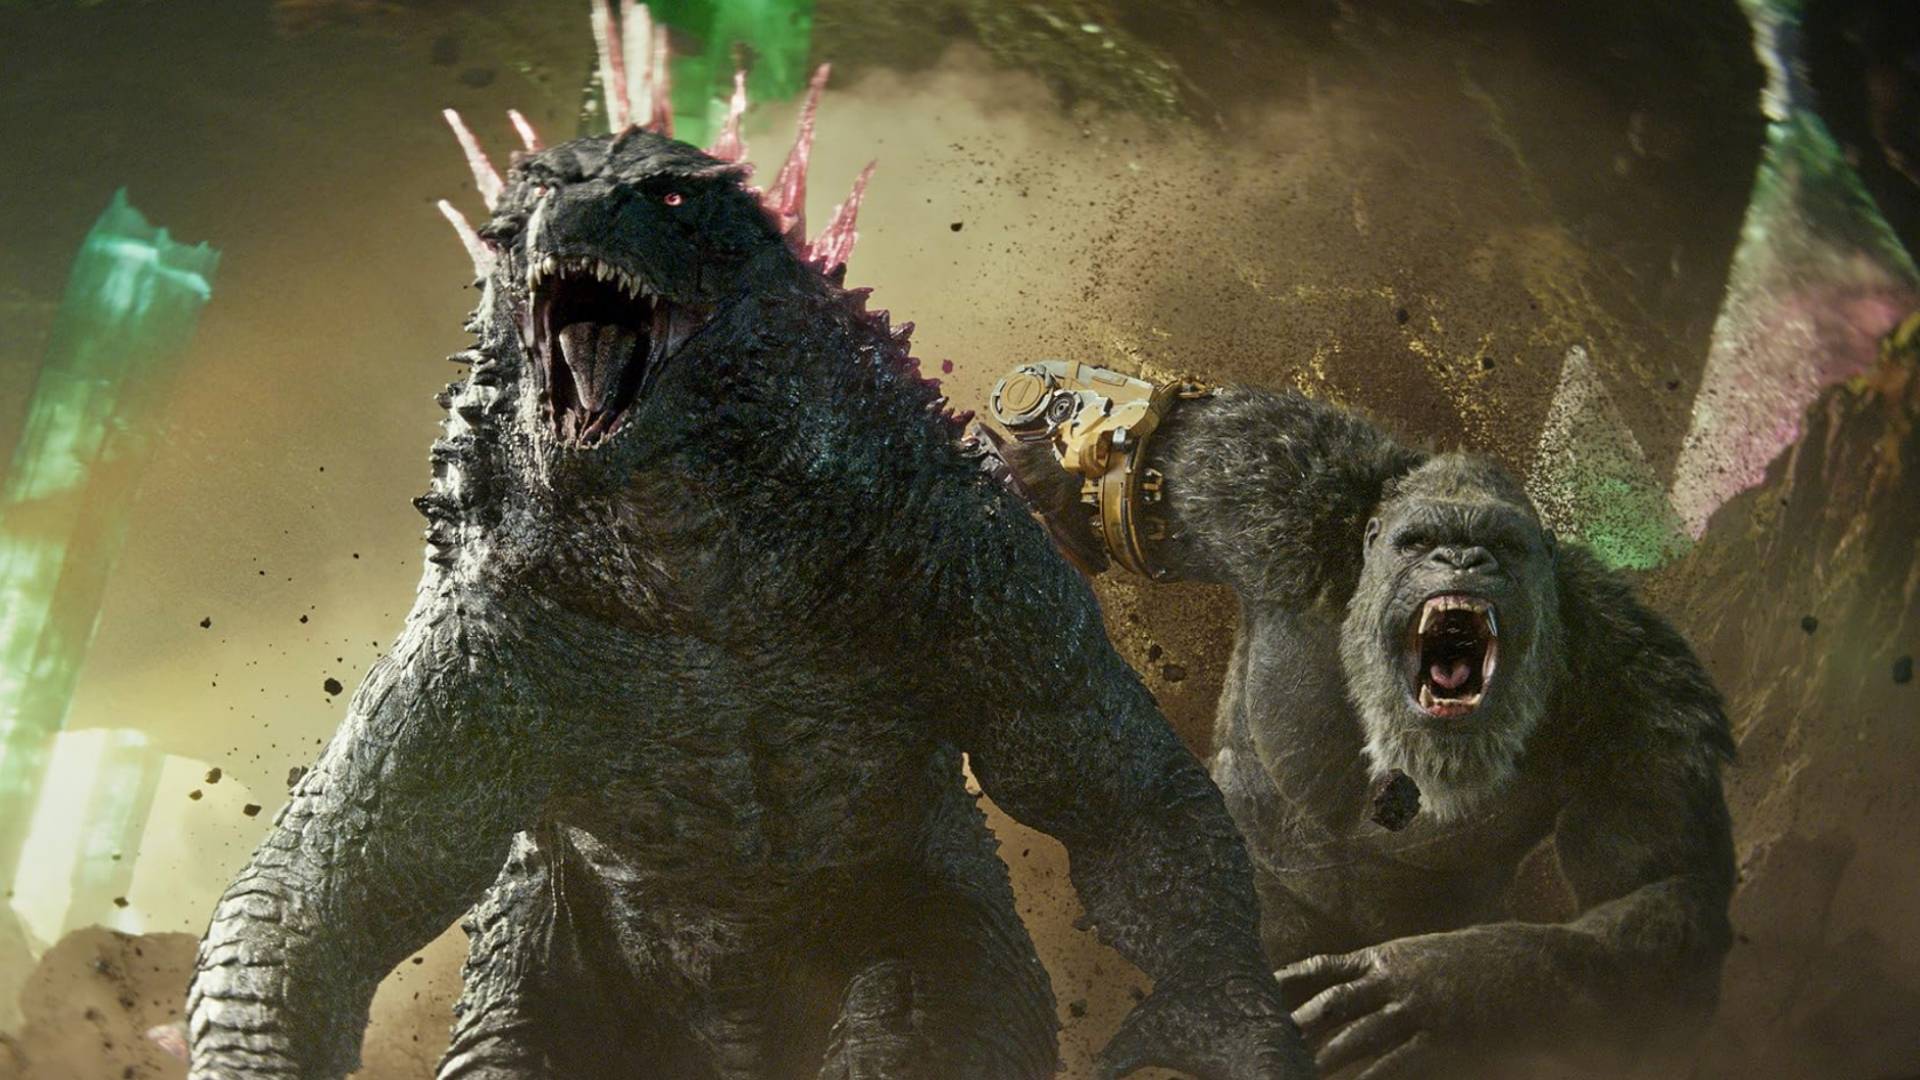 Godzilla x Kong: Das neue Imperium